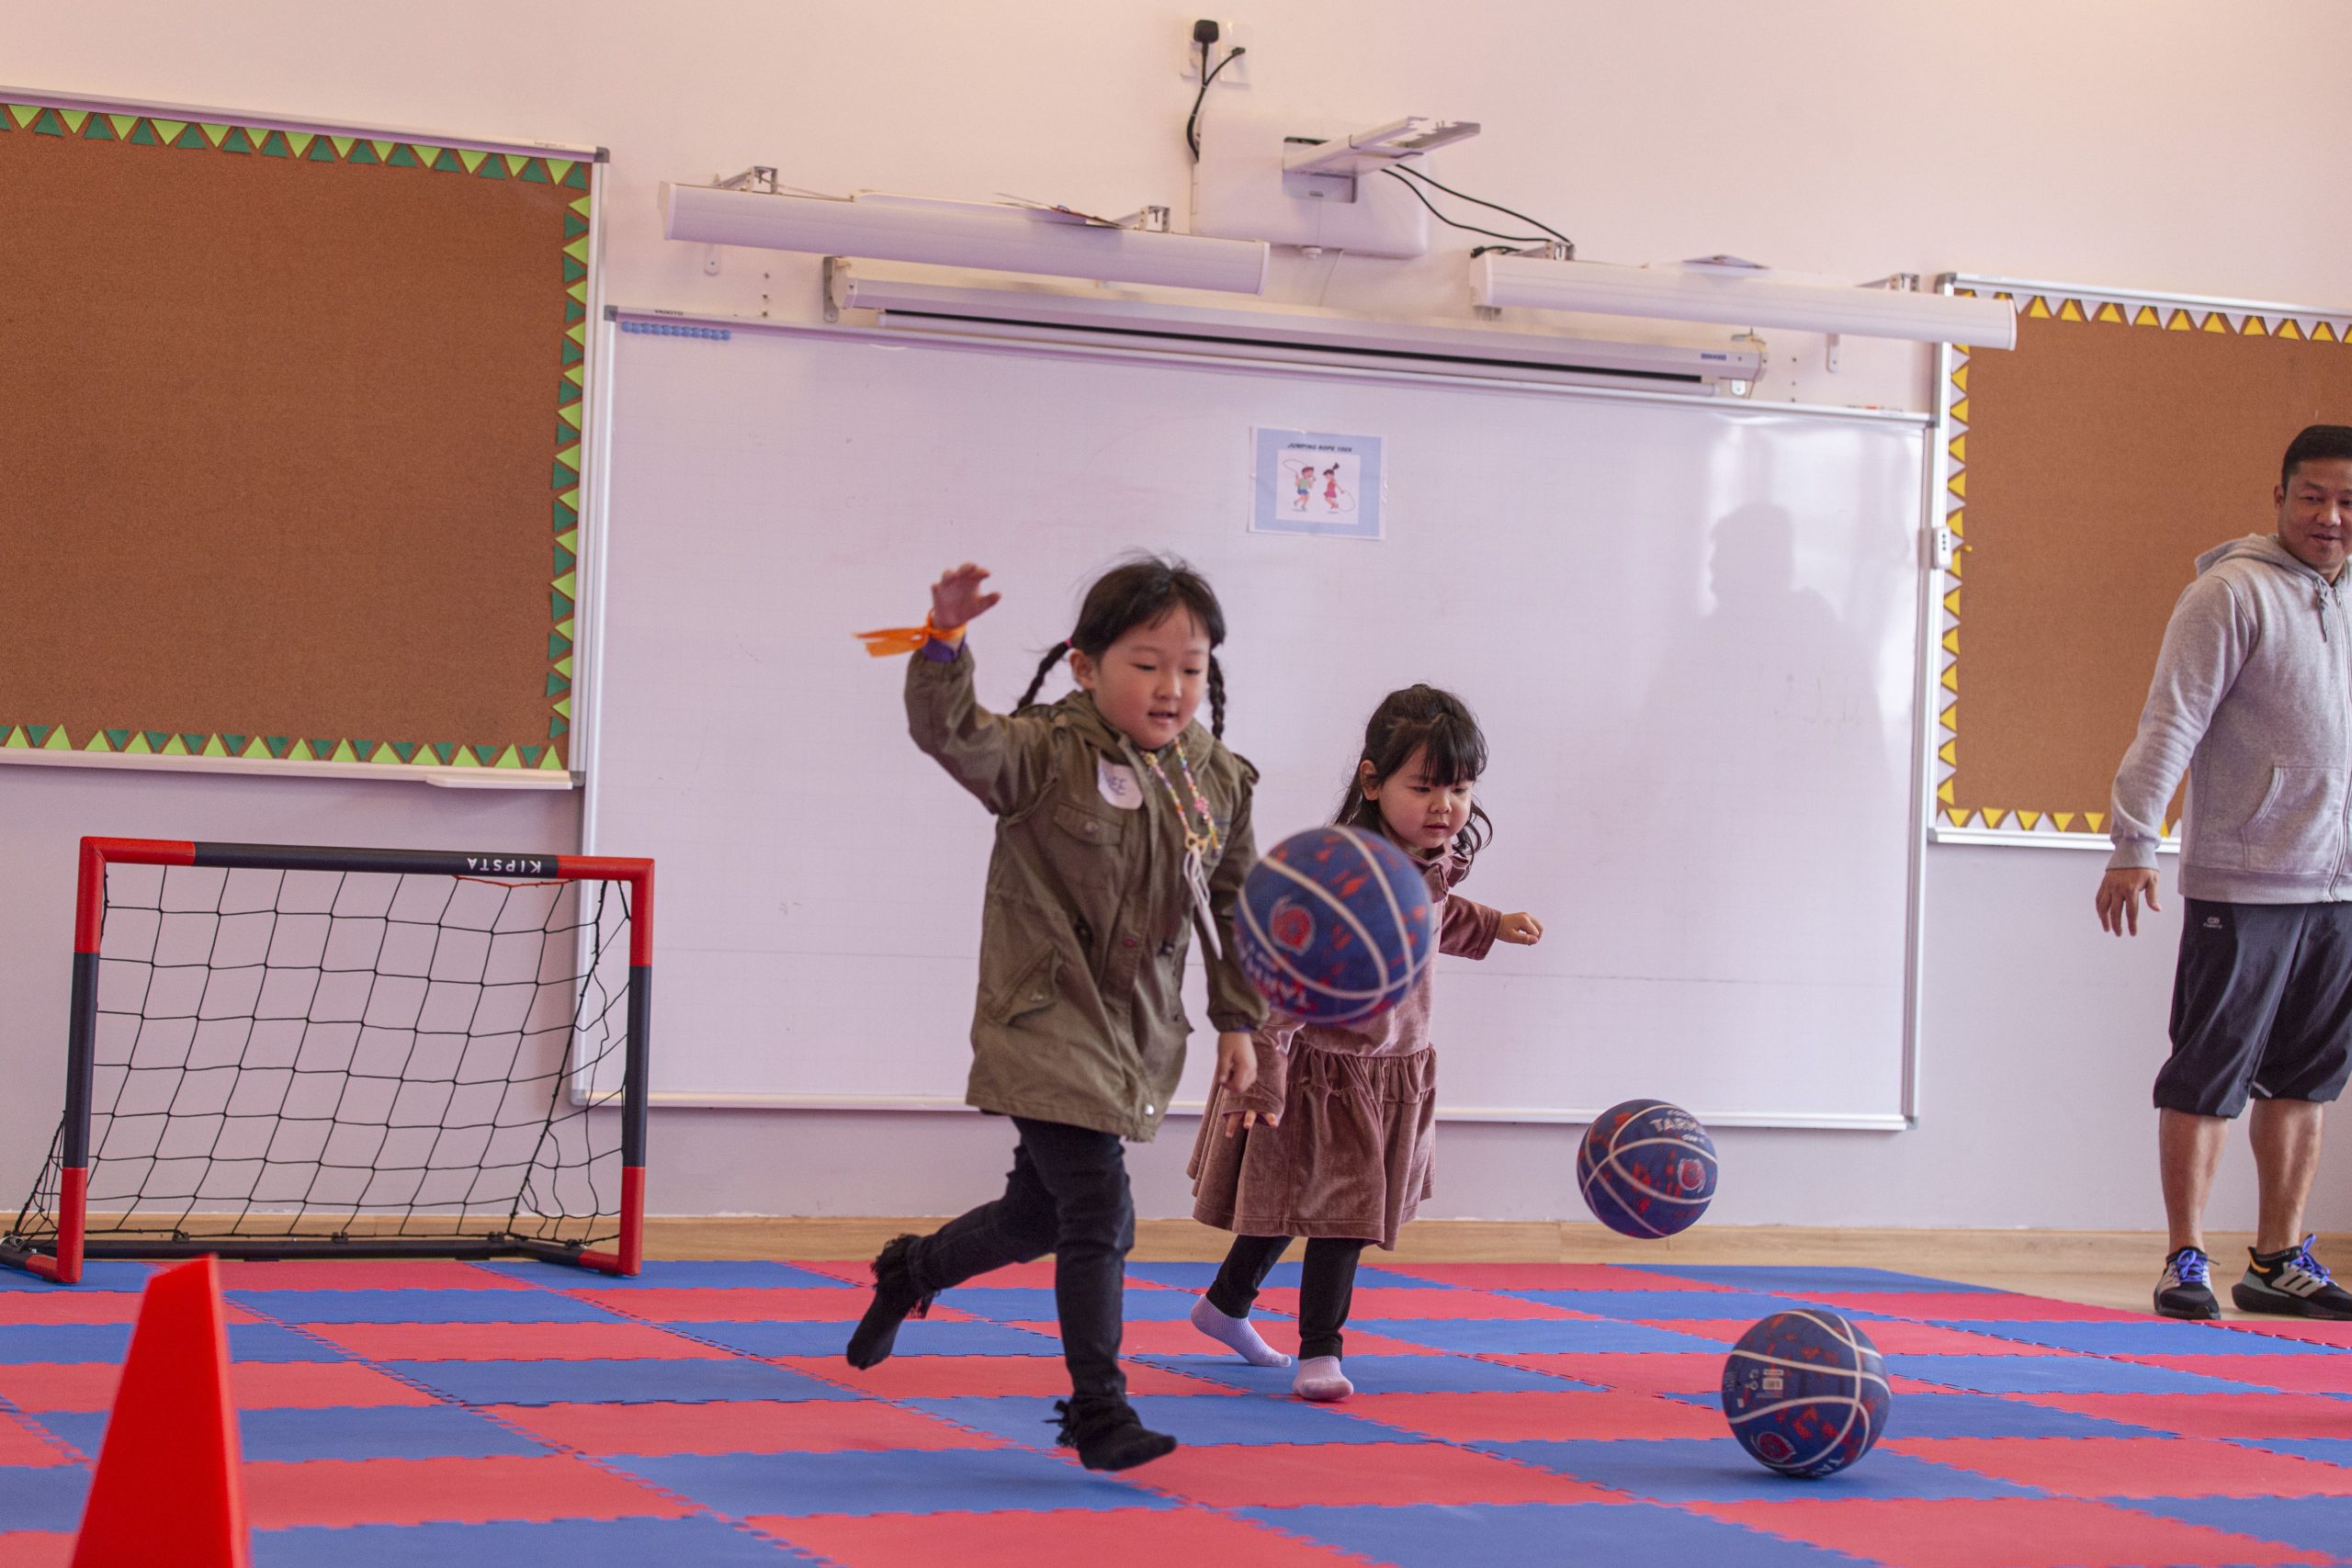 Sport: Children will practise dribbling skills and shooting skills in basketball